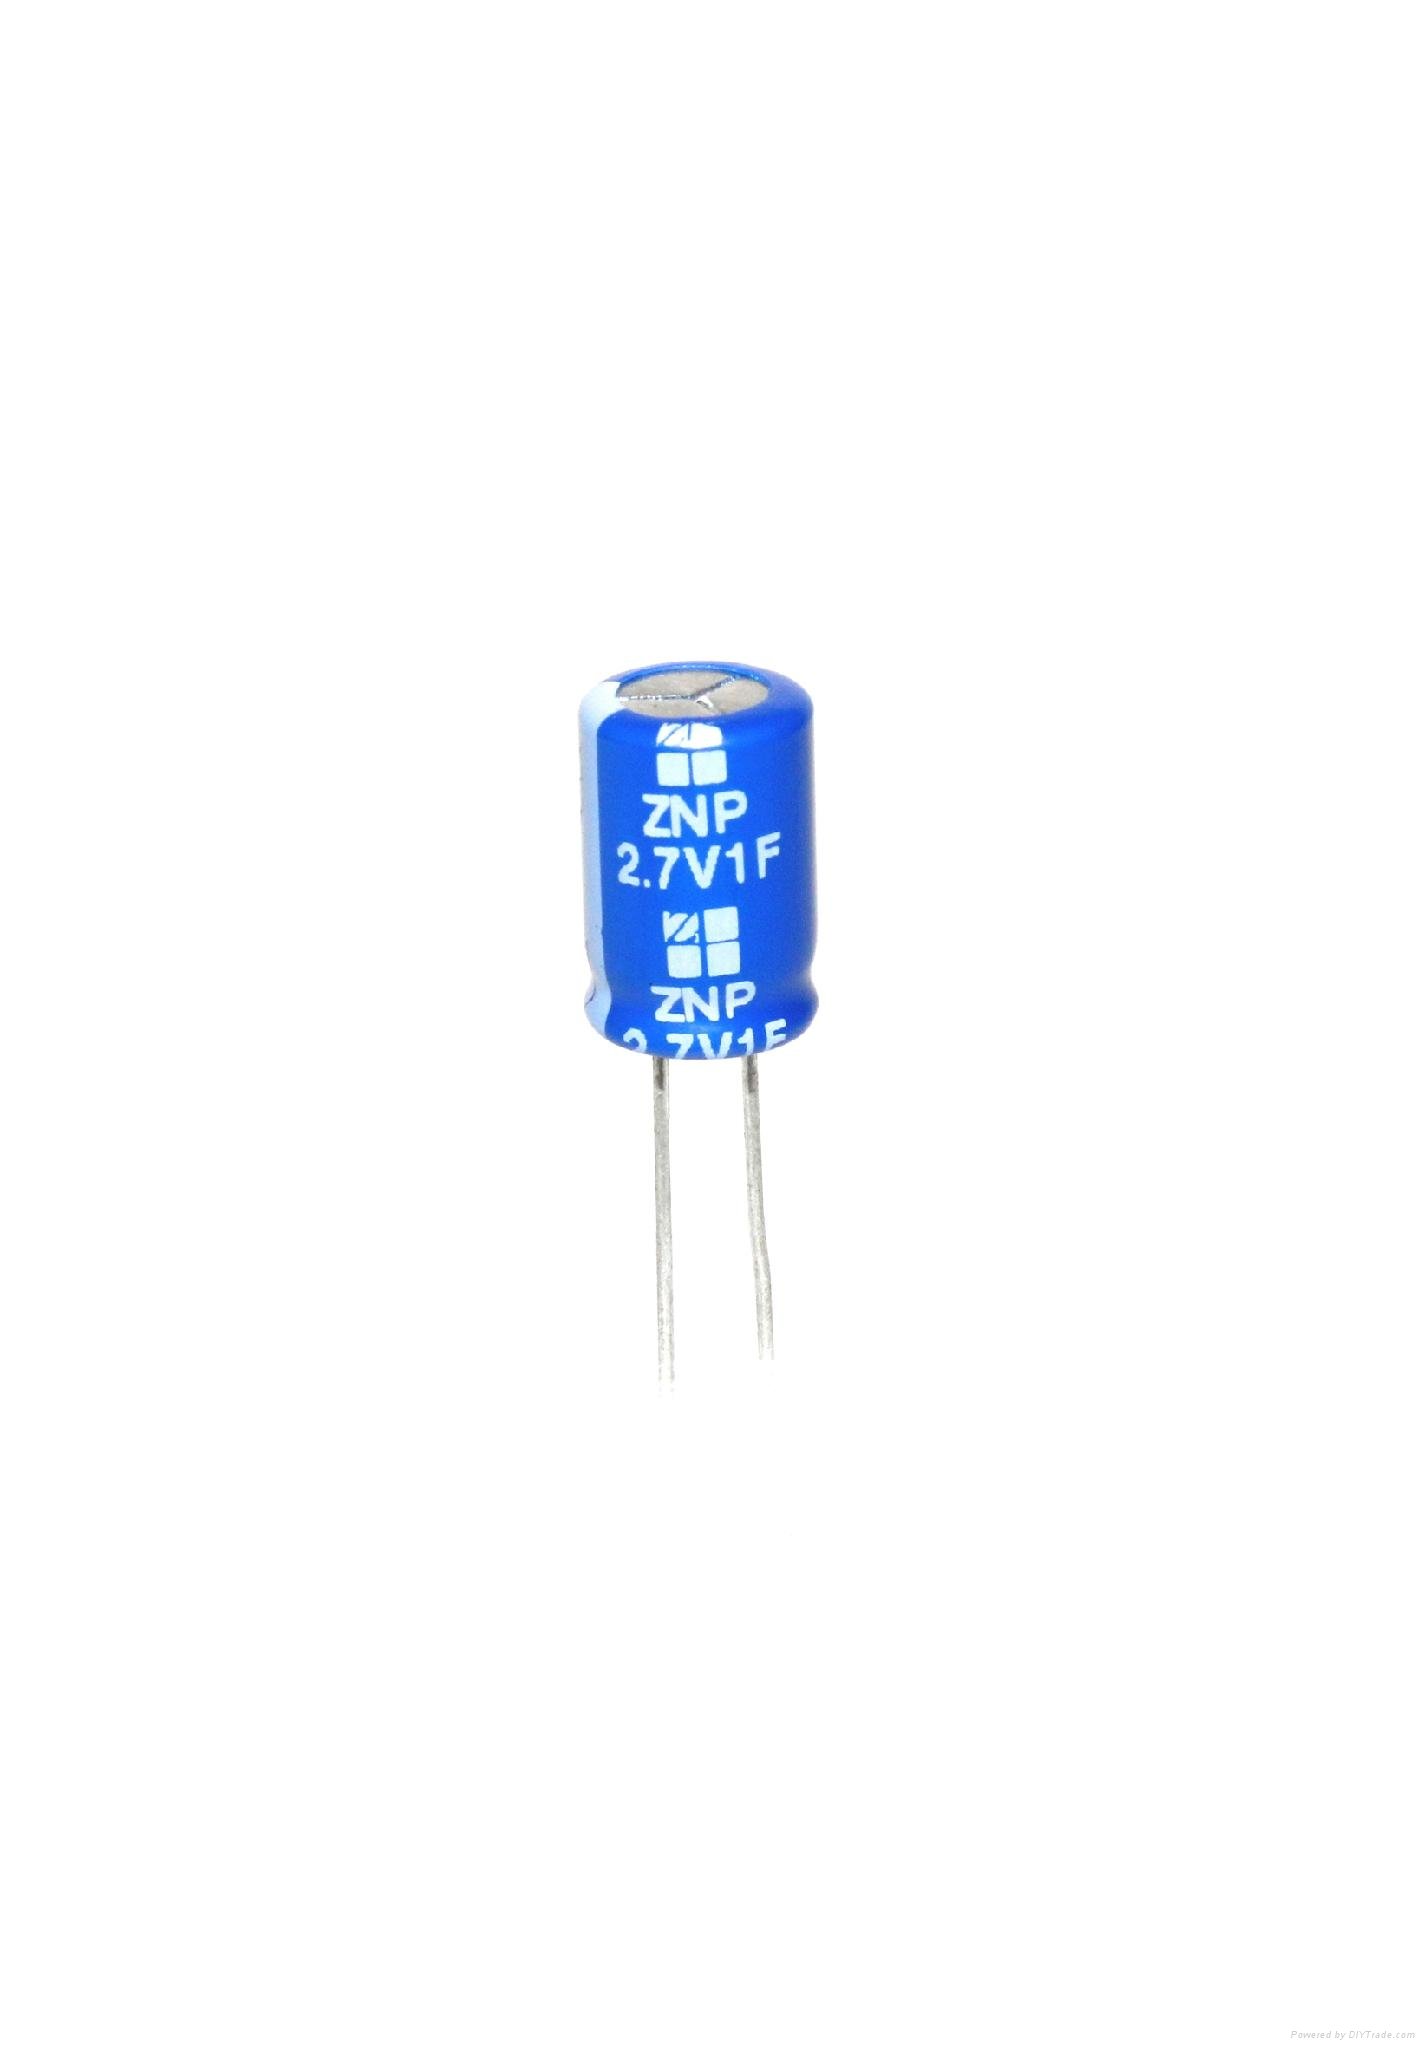 super capacitor 2.7V 1F 2